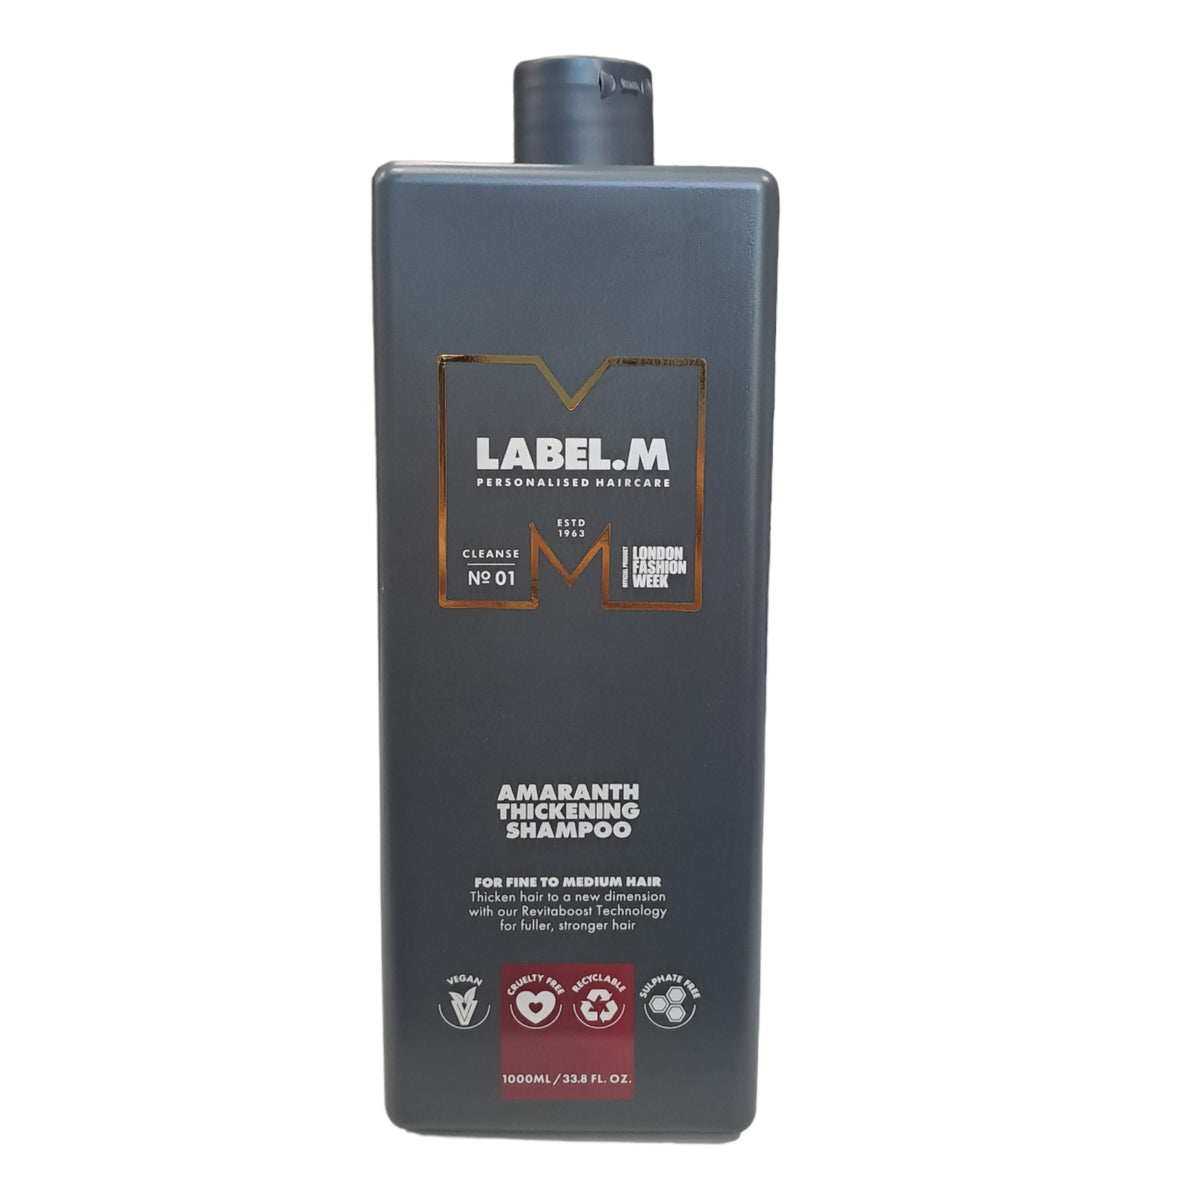 Label.m Amaranth Thickening Shampoo 1000ml